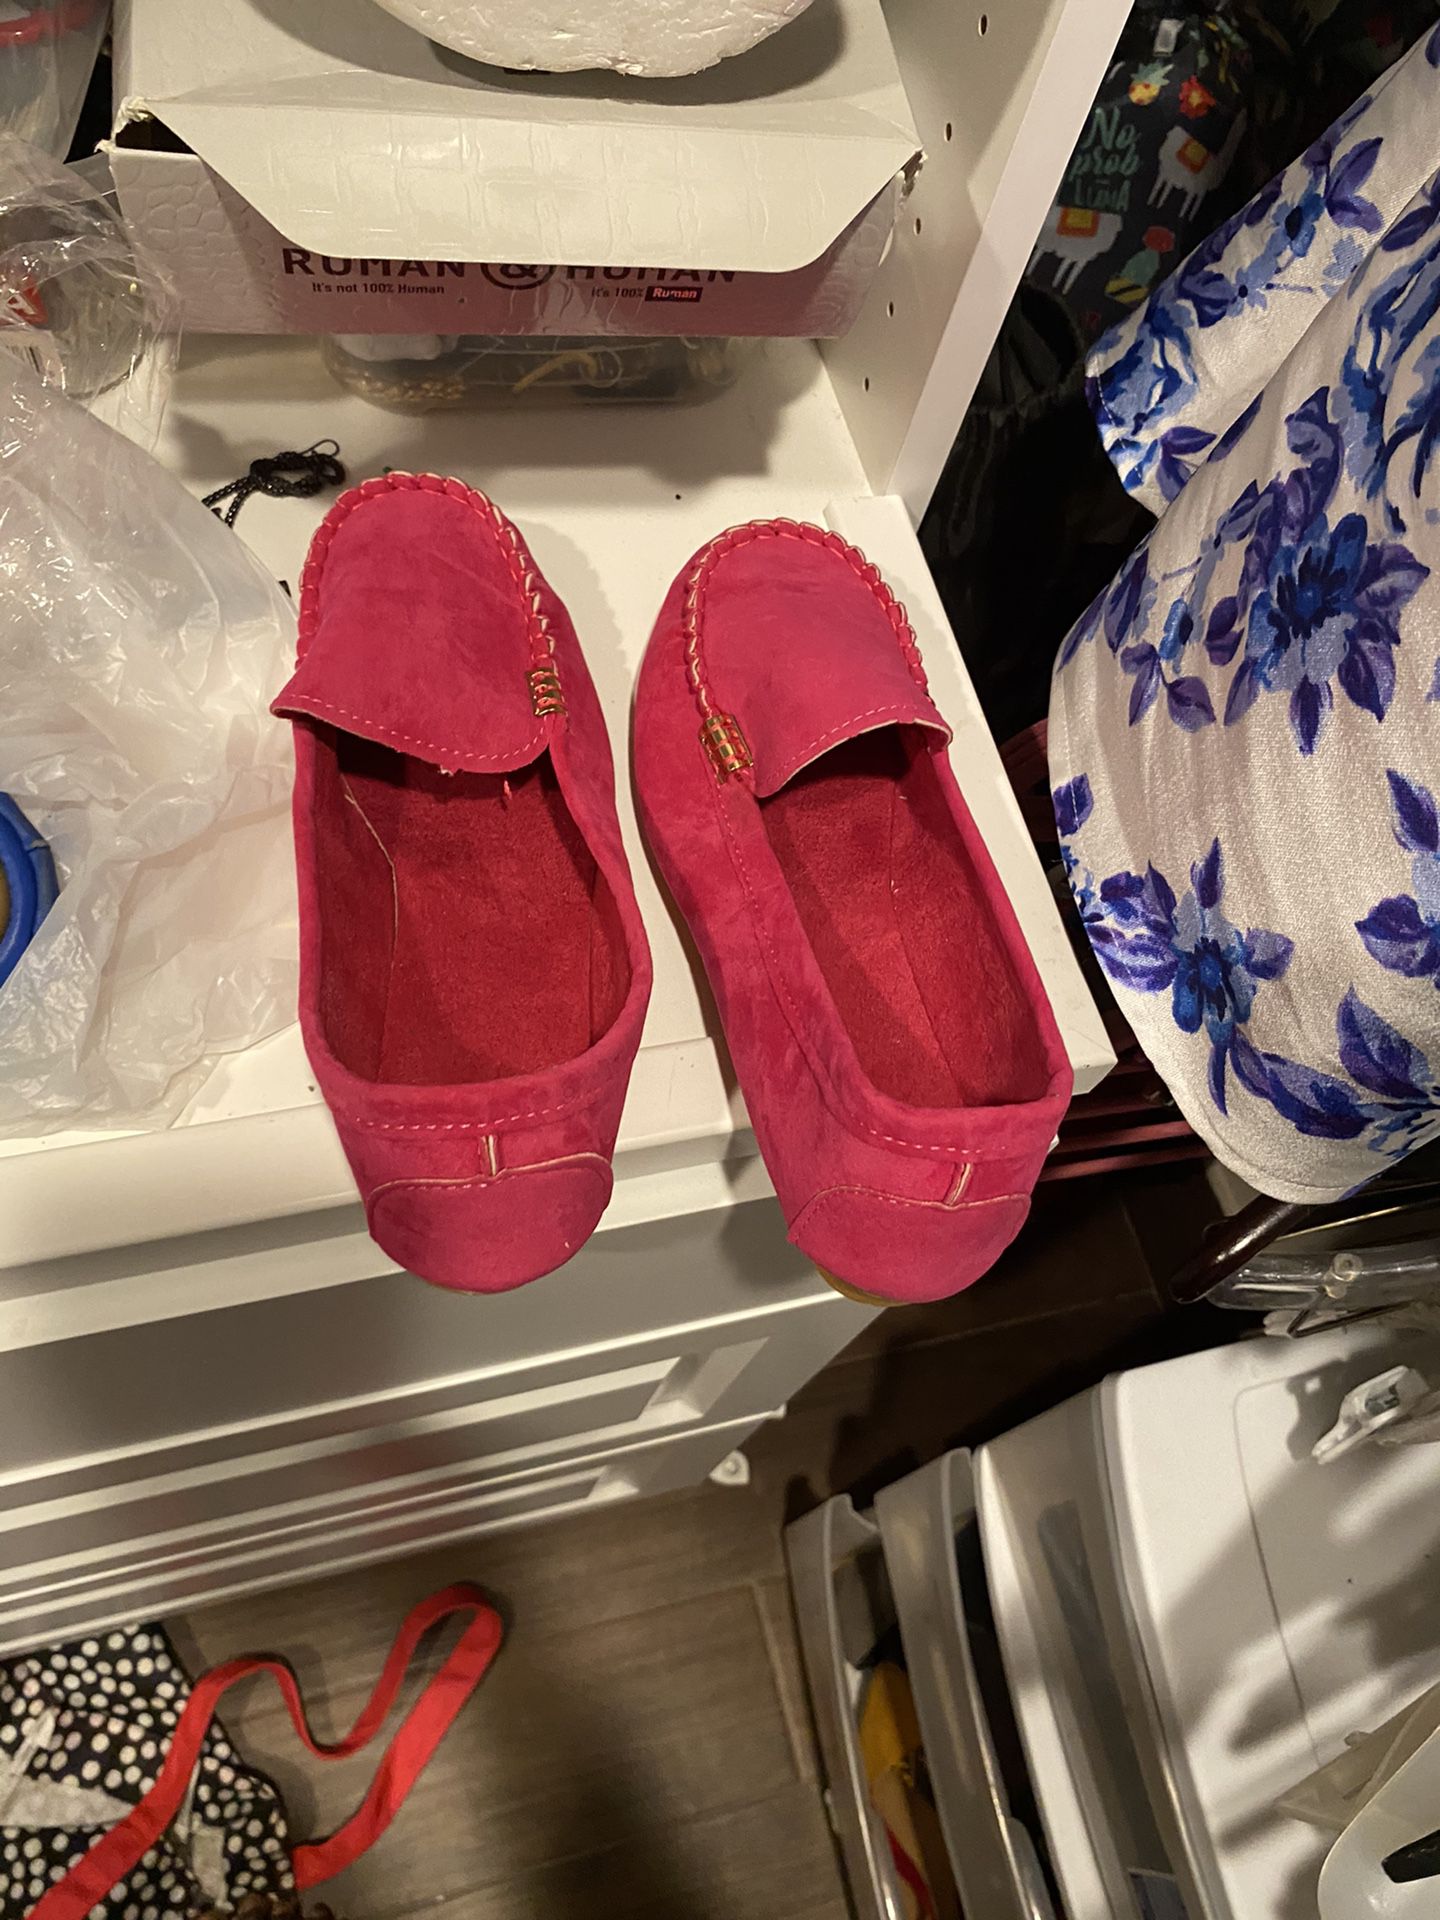 Hot pink loafer size 9